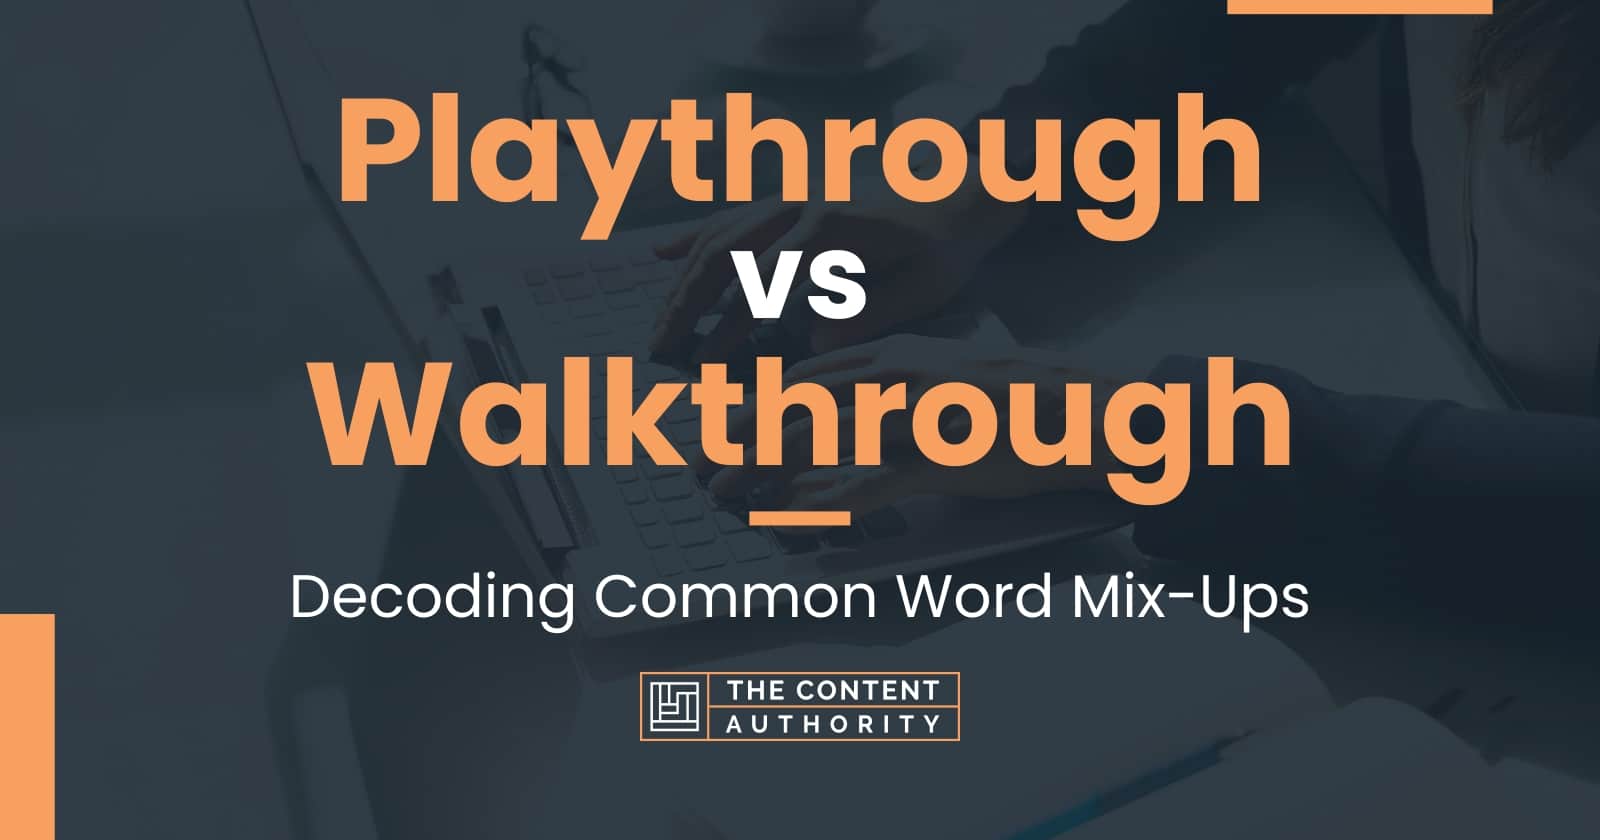 playthrough-vs-walkthrough-decoding-common-word-mix-ups